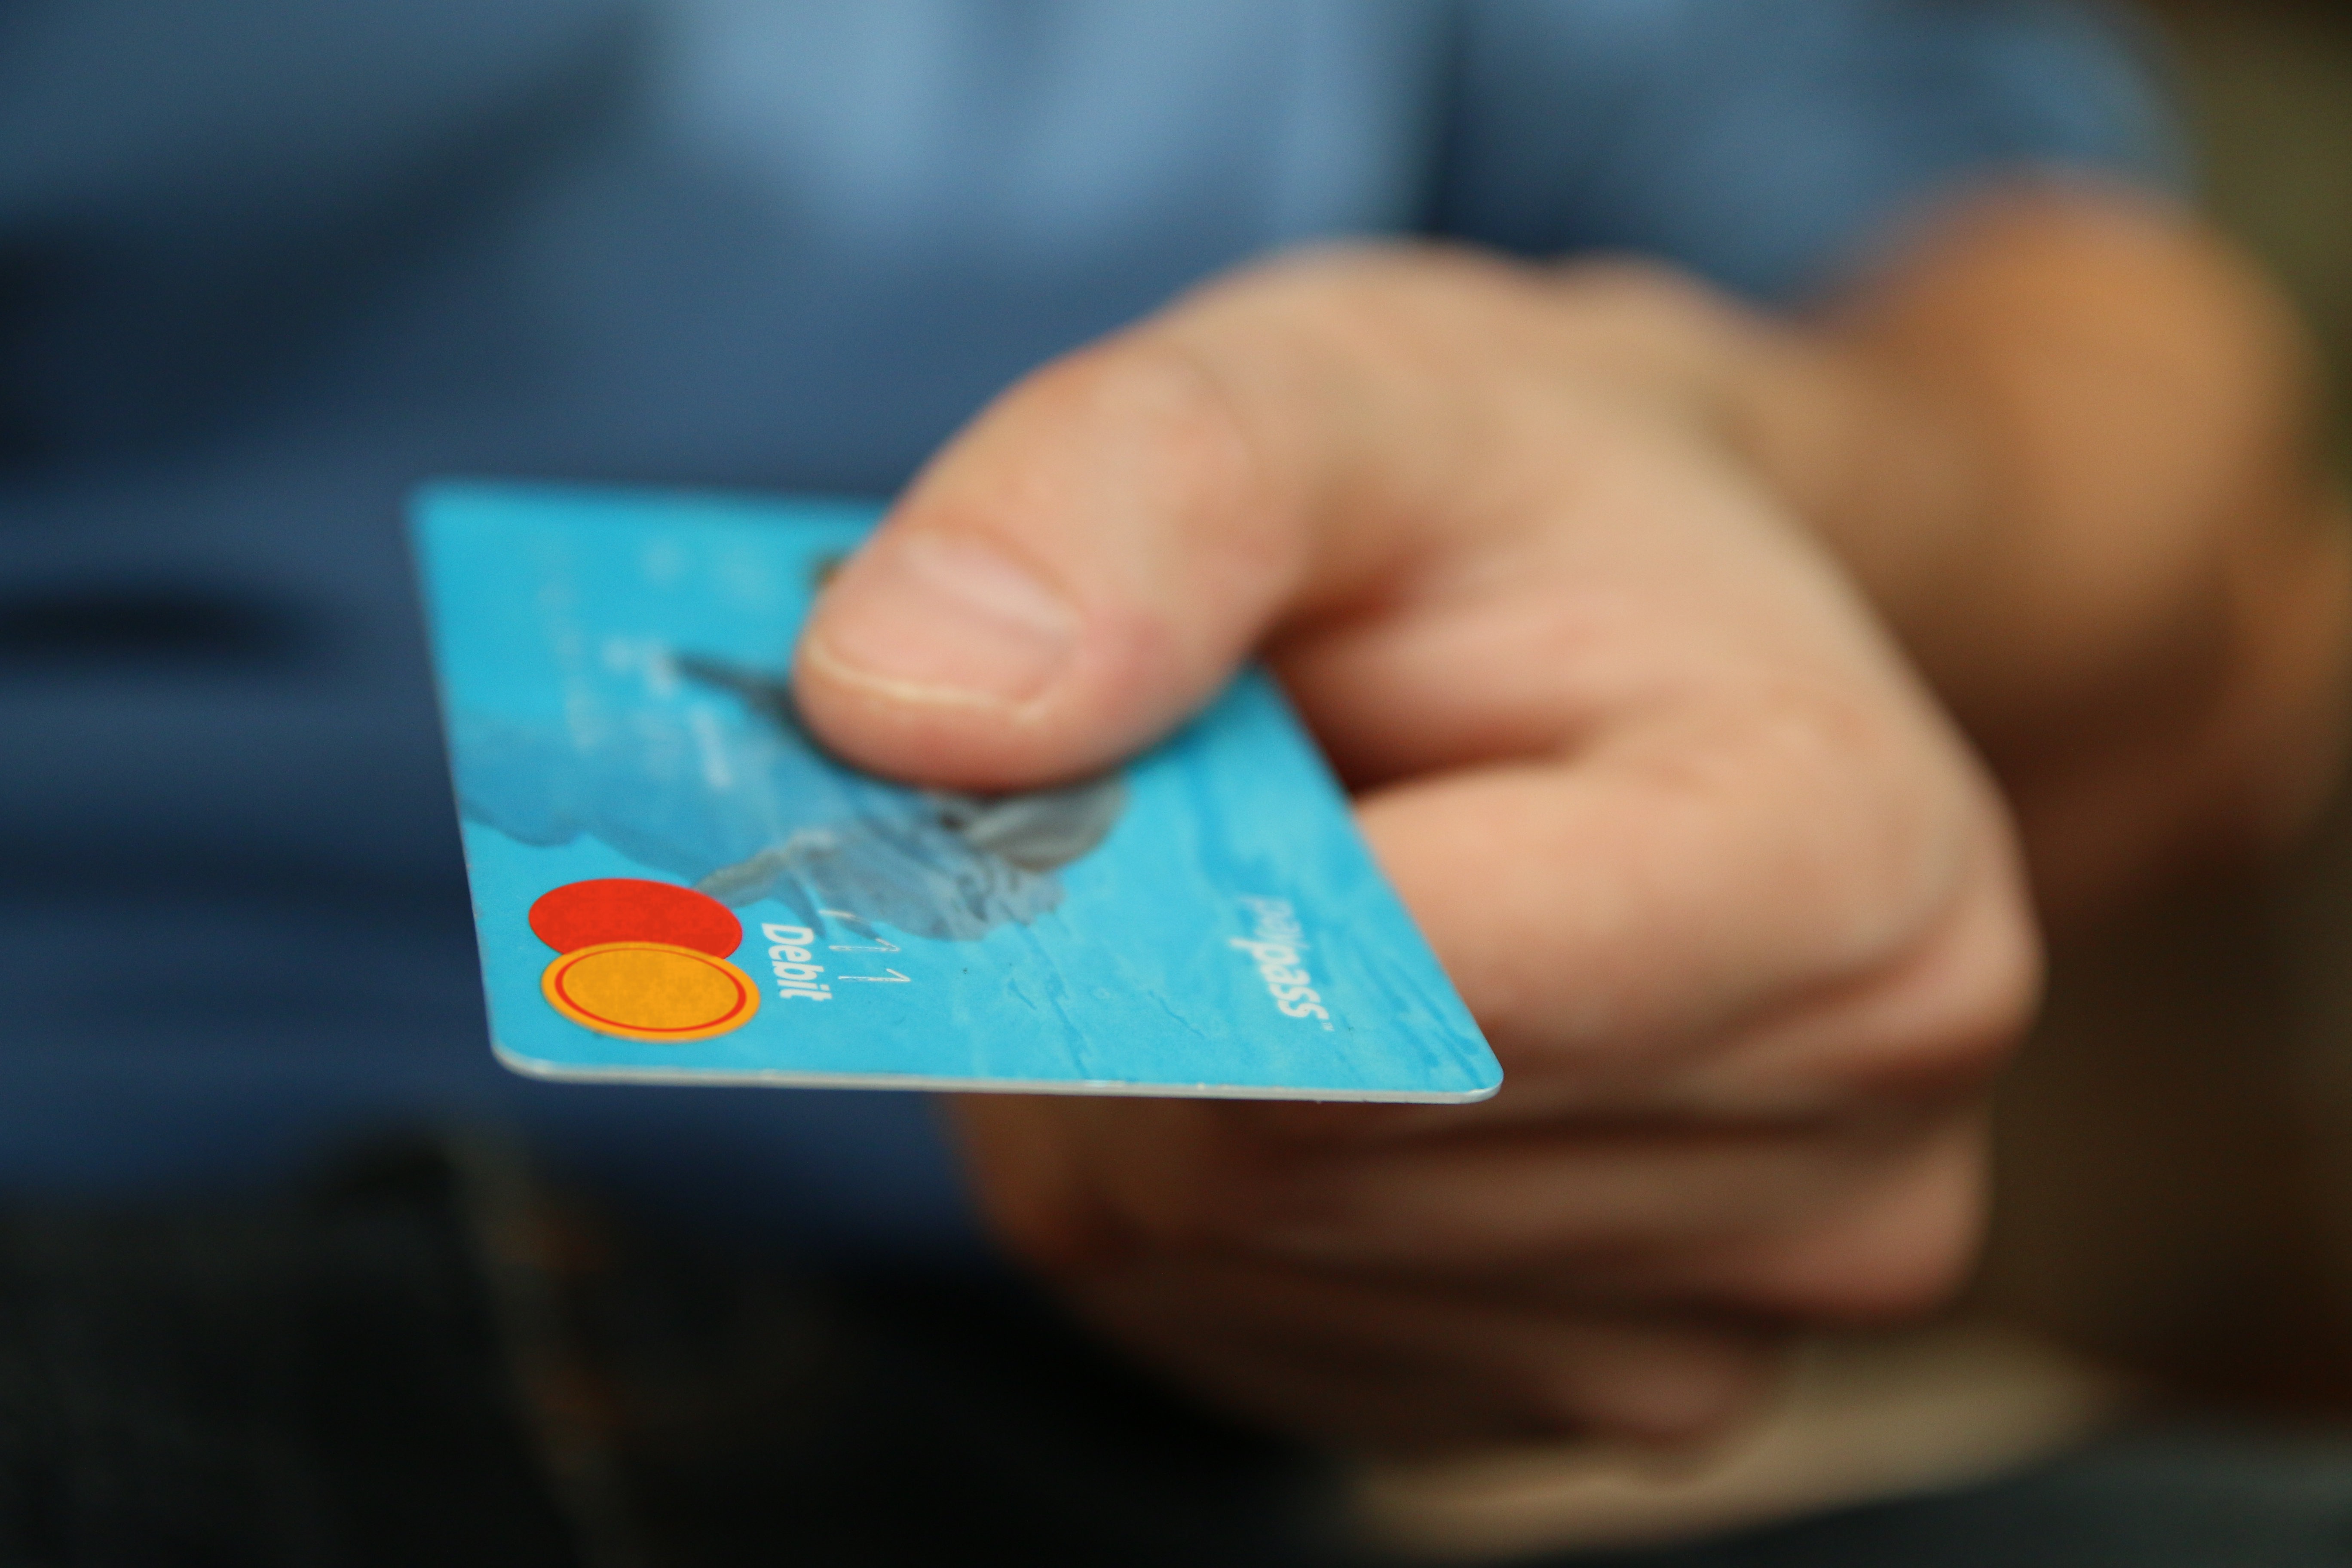 Parathon website image: Hand holding a debit card